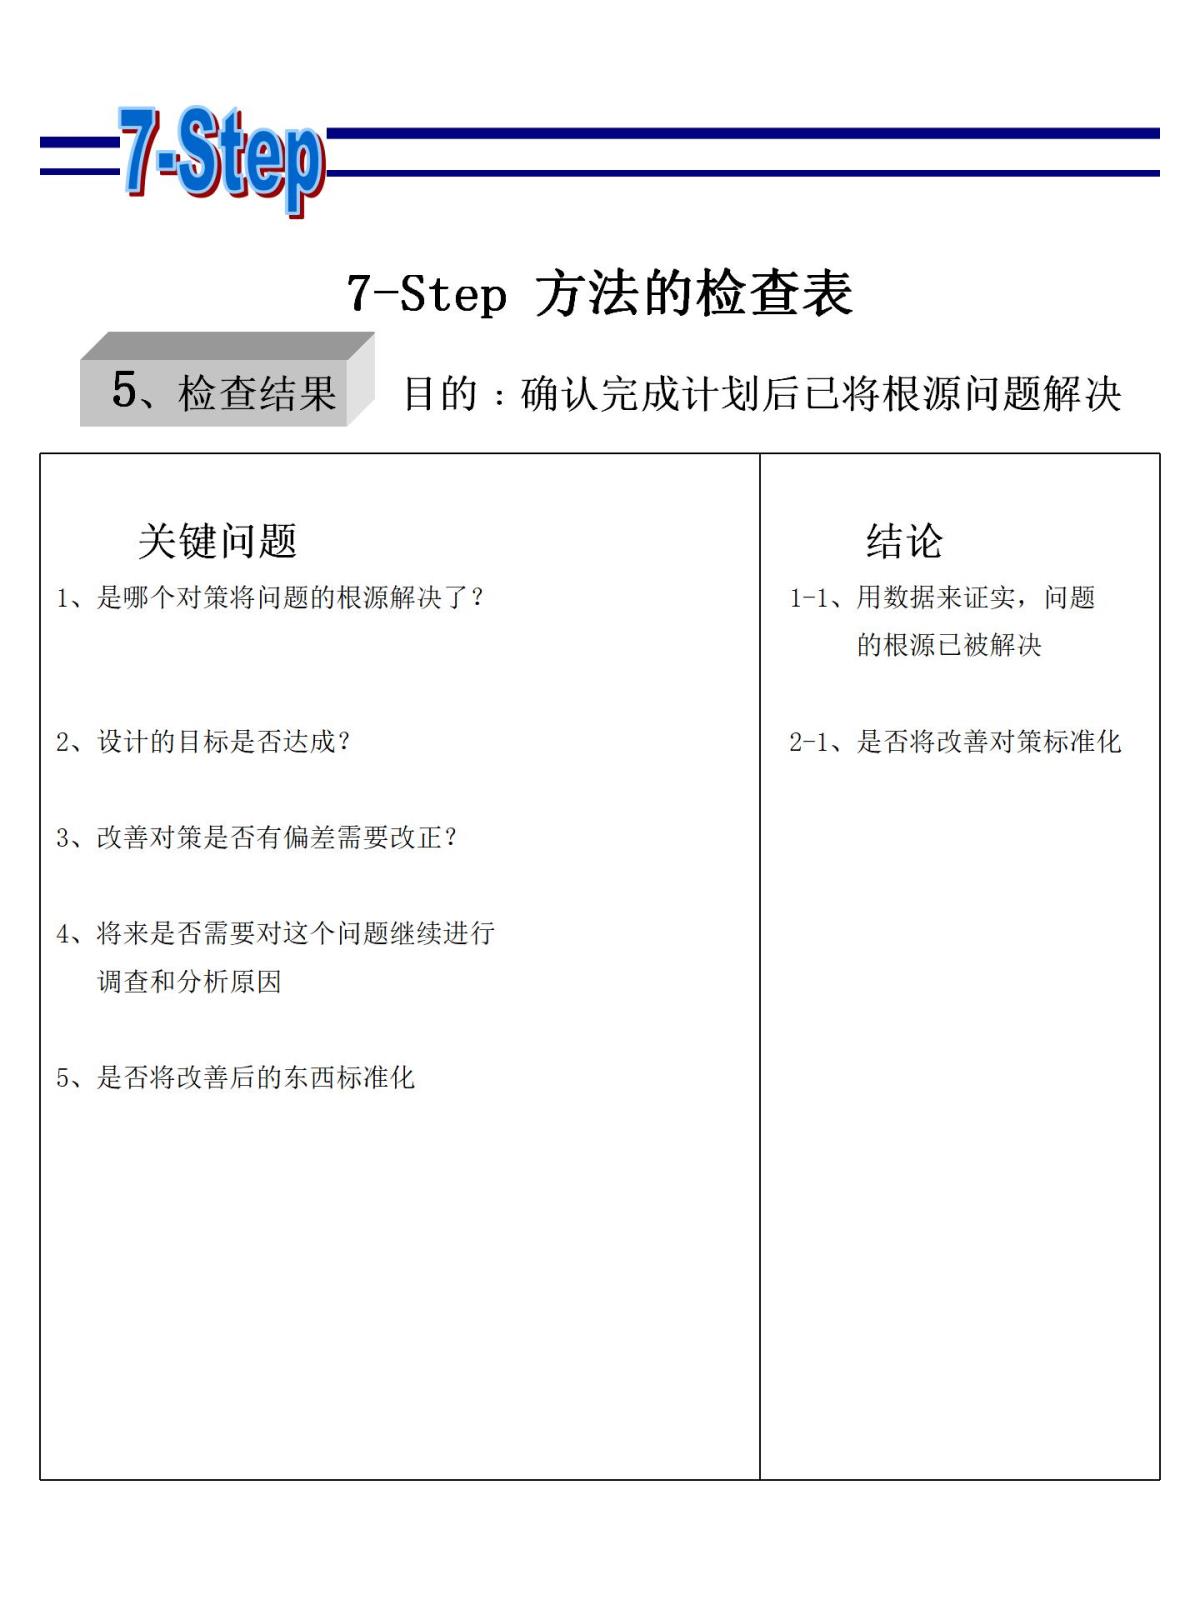 7-step方法_05.jpg